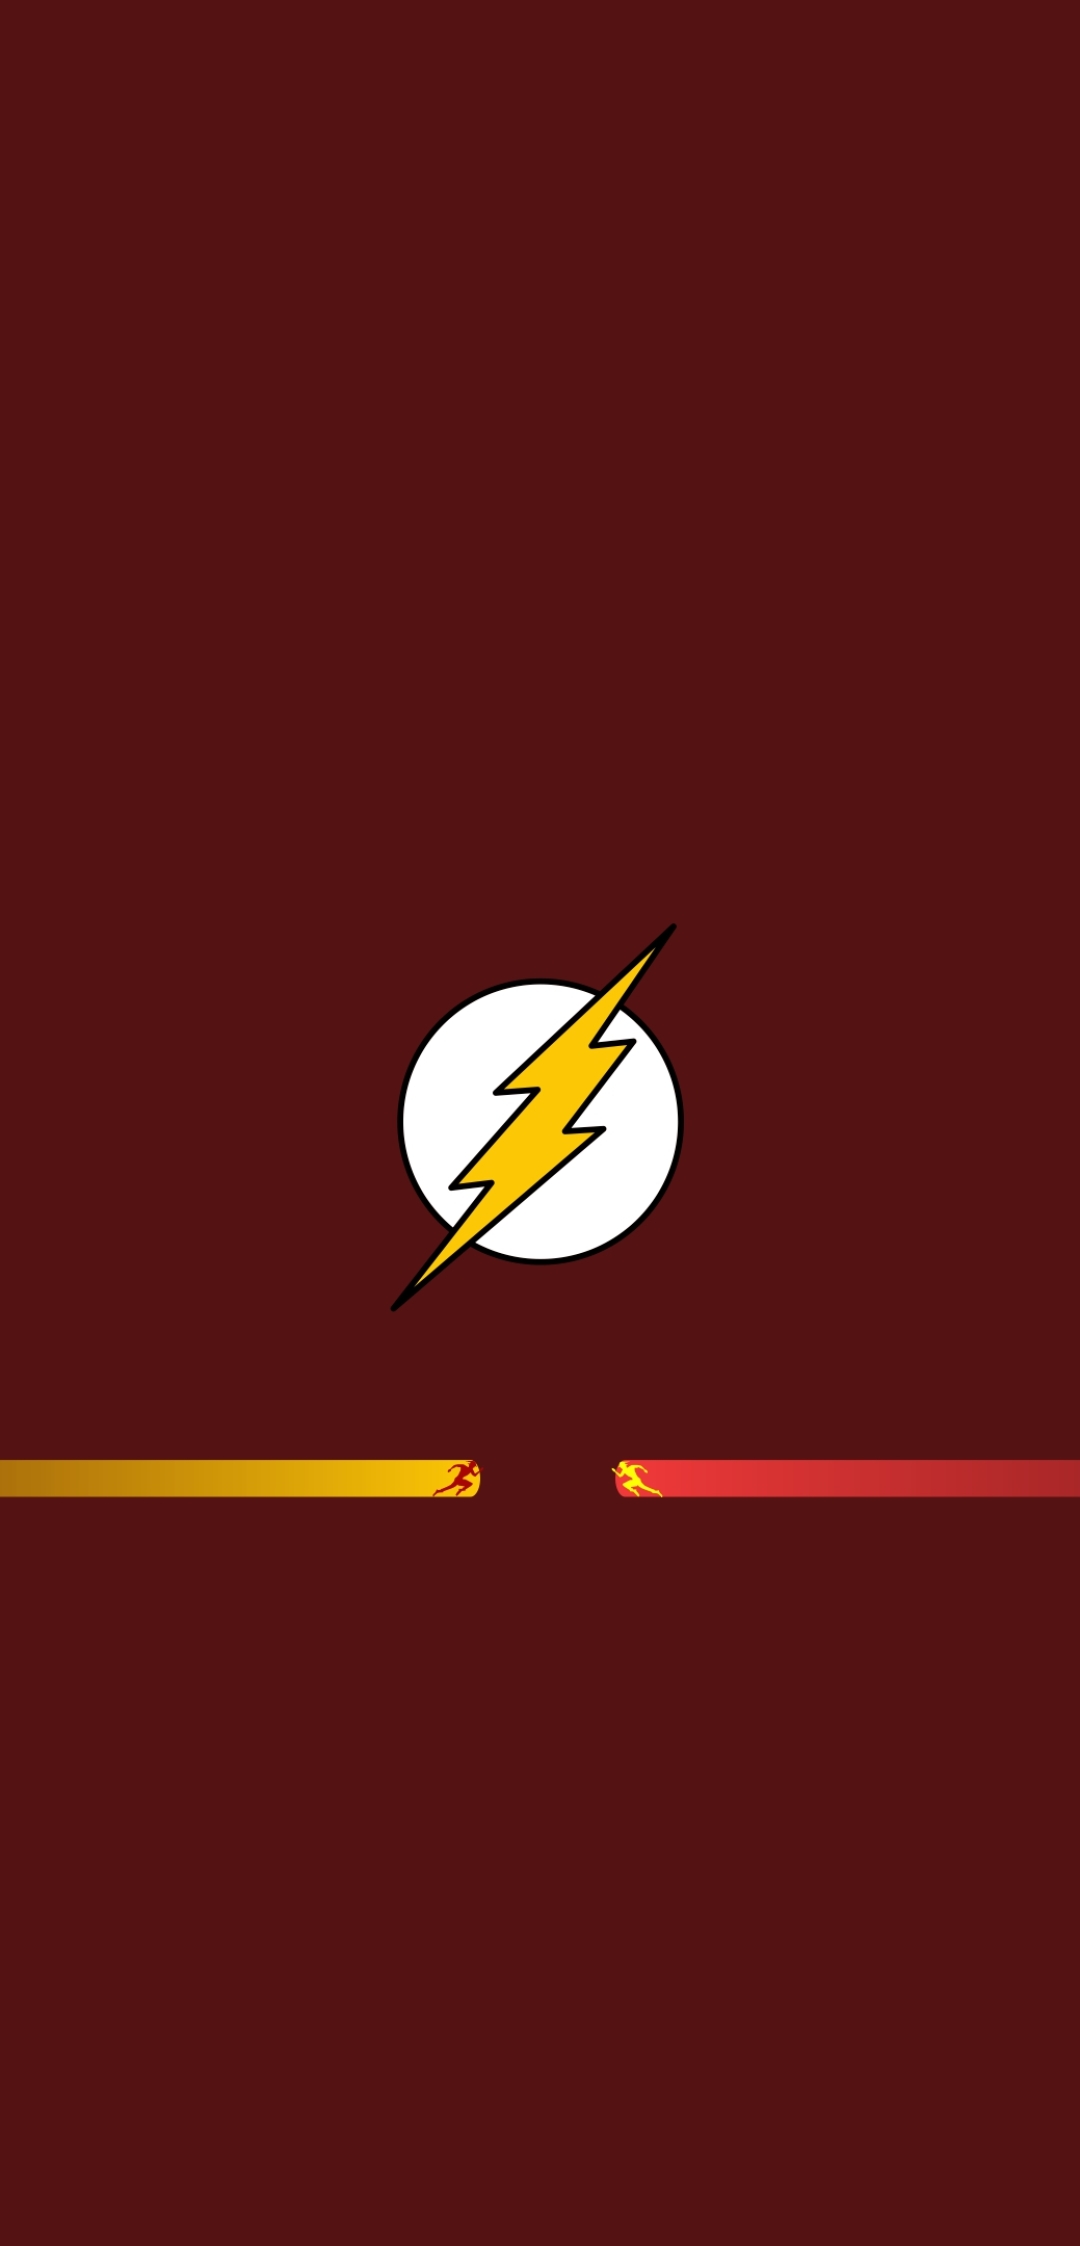 Descarga gratuita de fondo de pantalla para móvil de Destello, Minimalista, Historietas, Dc Comics, The Flash, Flash Inverso.